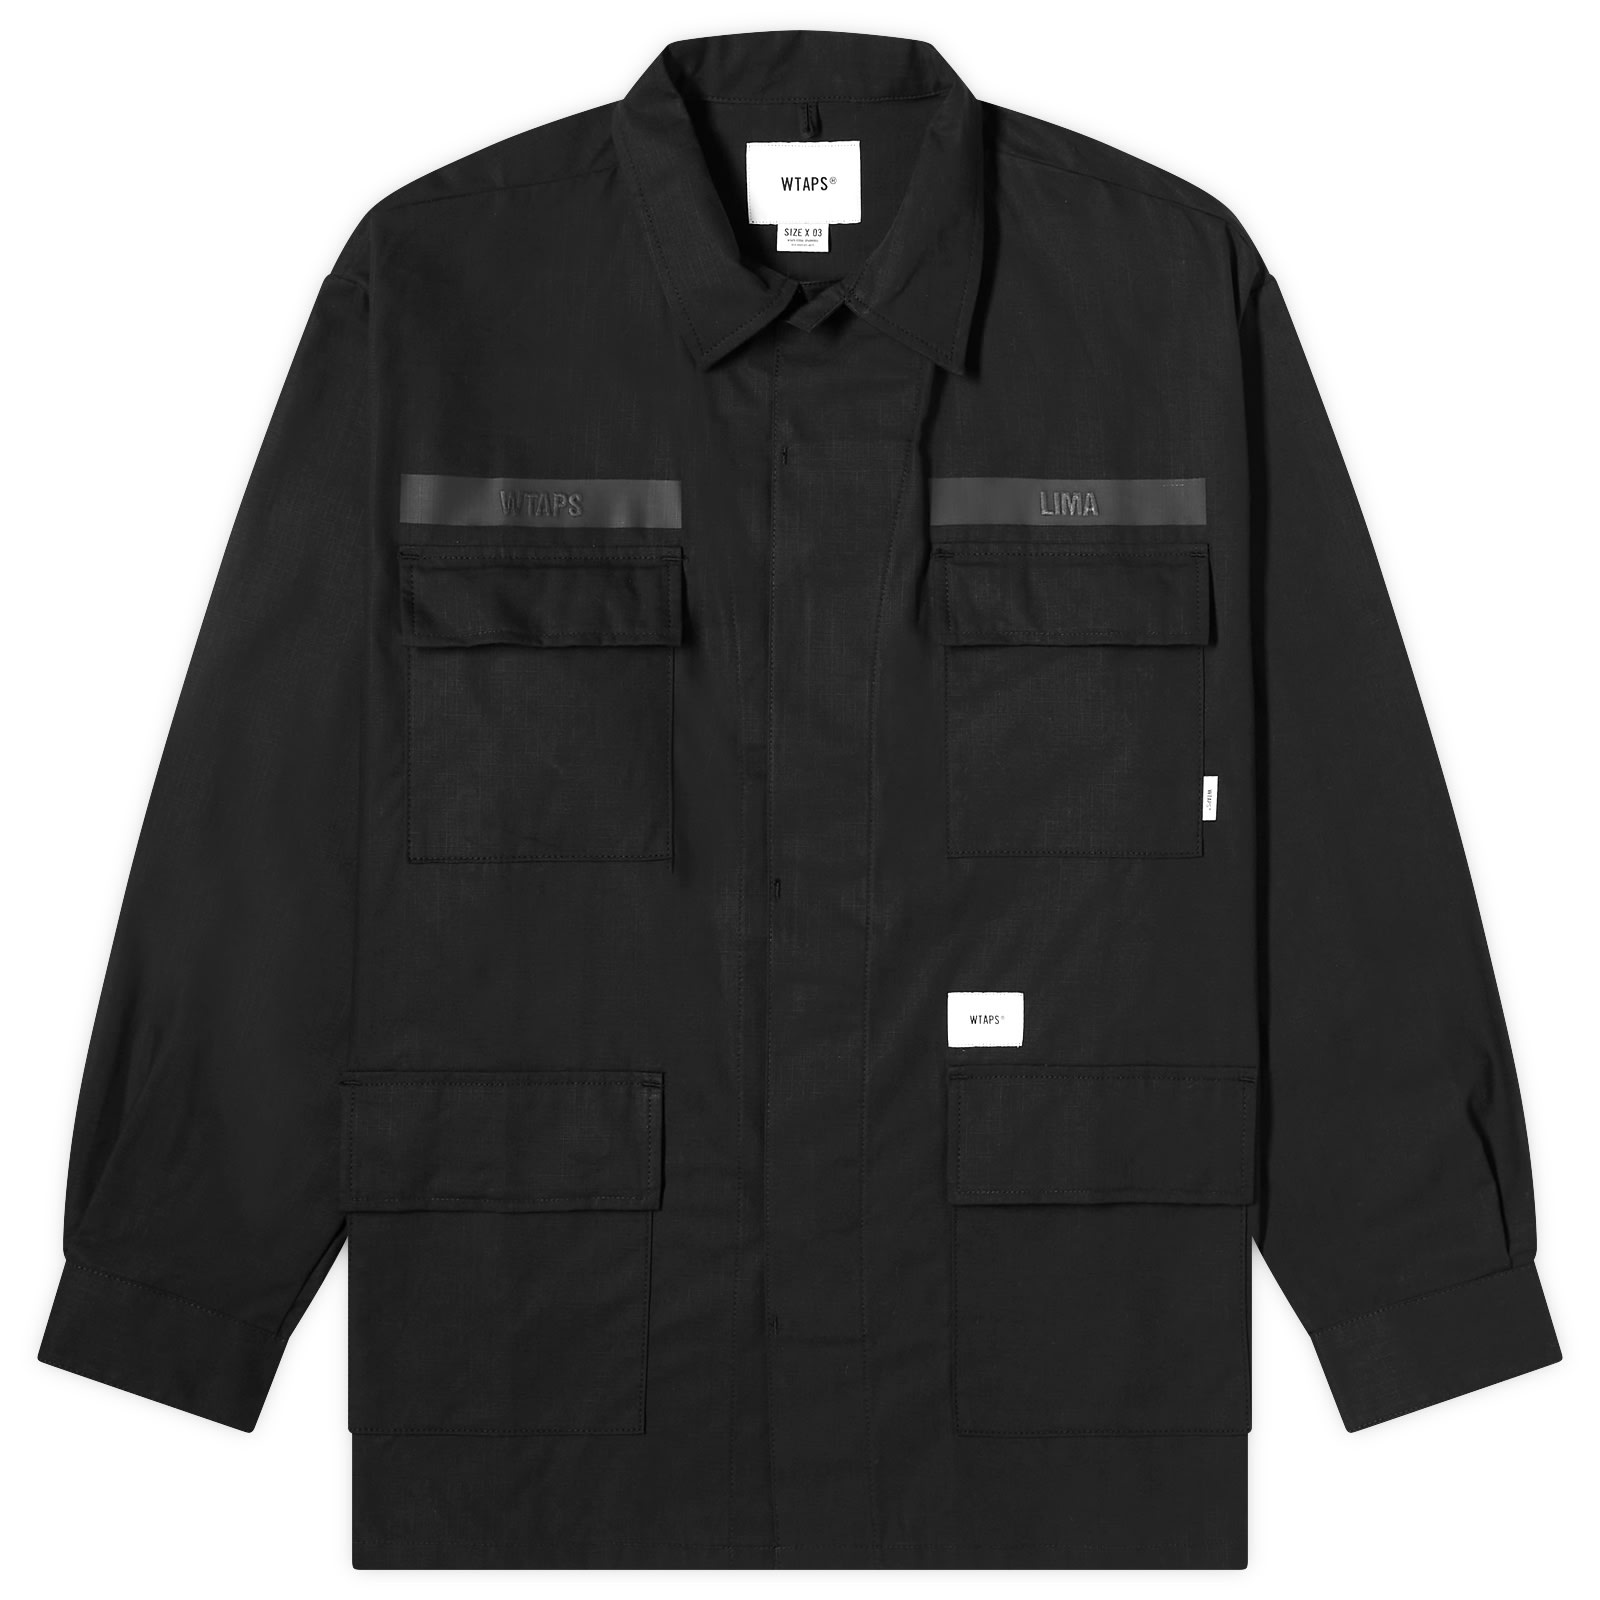 WTAPS 17 Shirt Jacket - 1